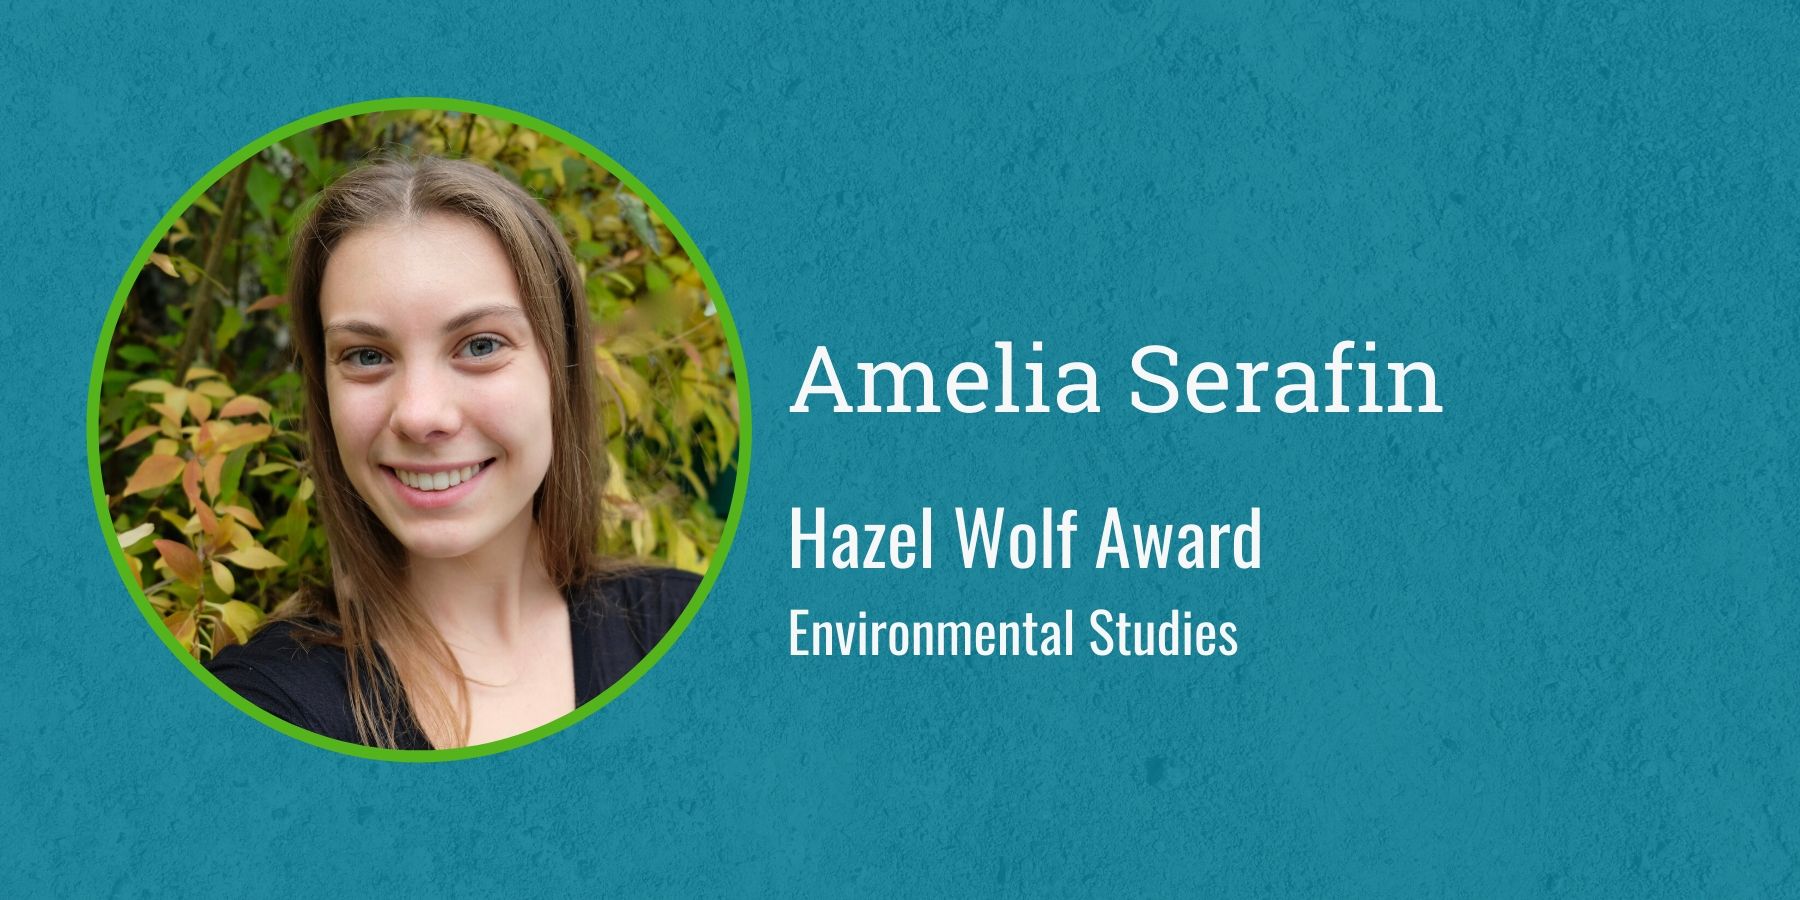 Photo of Amelia Serafin with text Hazel Wolf Award, Environmental Studies